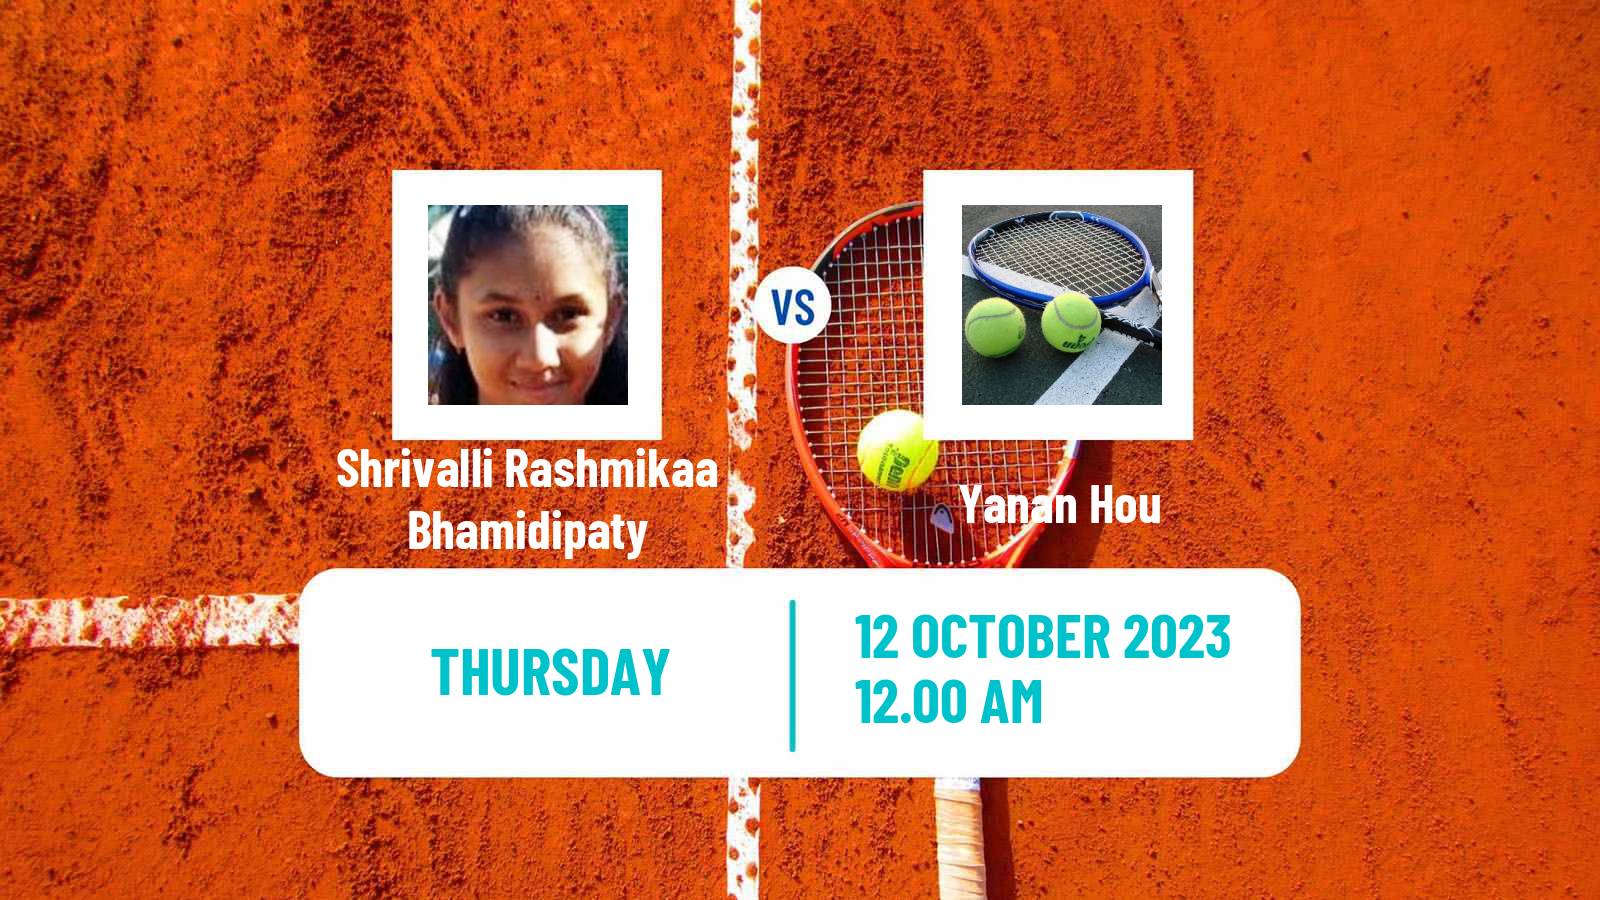 Tennis ITF W15 Hua Hin Women Shrivalli Rashmikaa Bhamidipaty - Yanan Hou